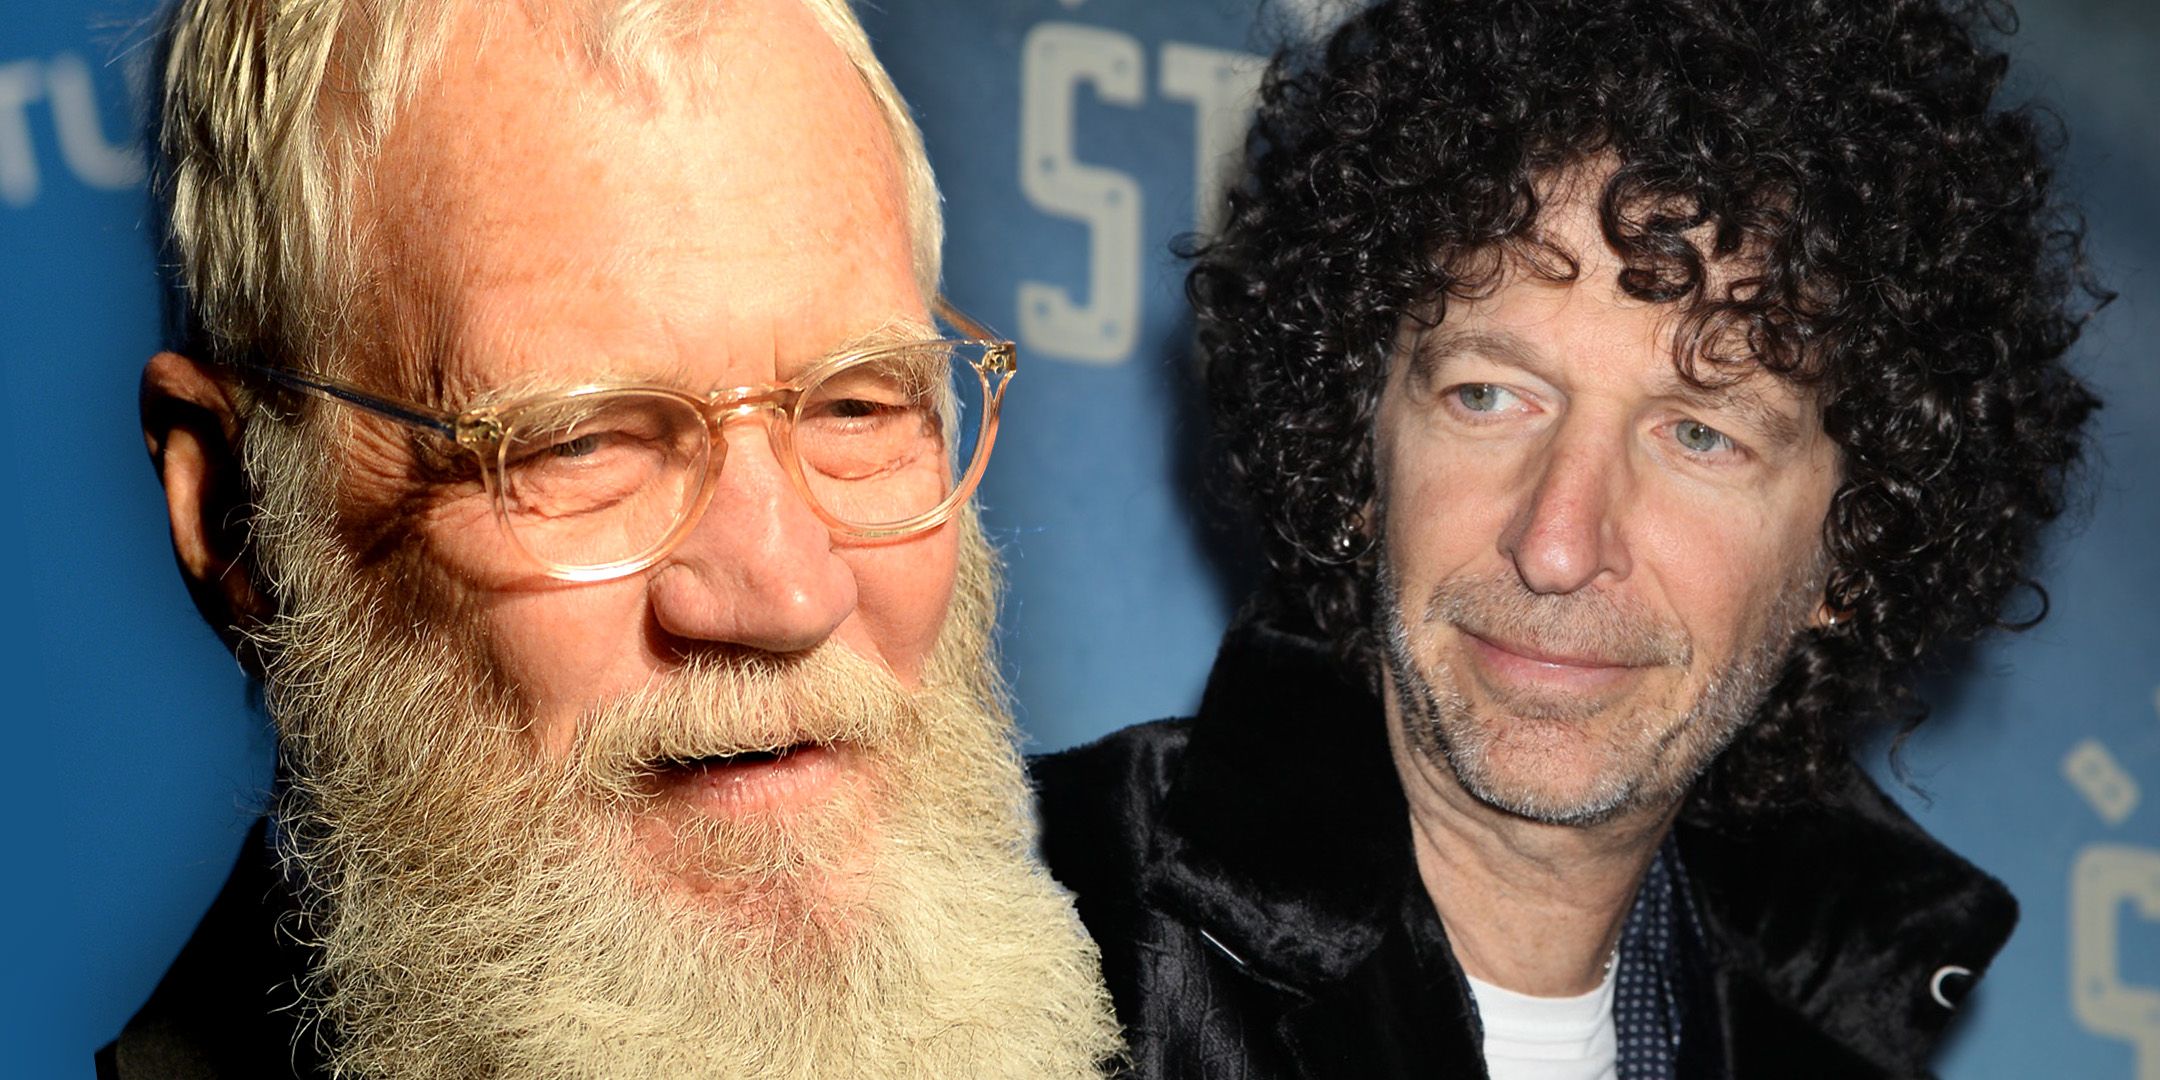 Howard Stern and David Letterman